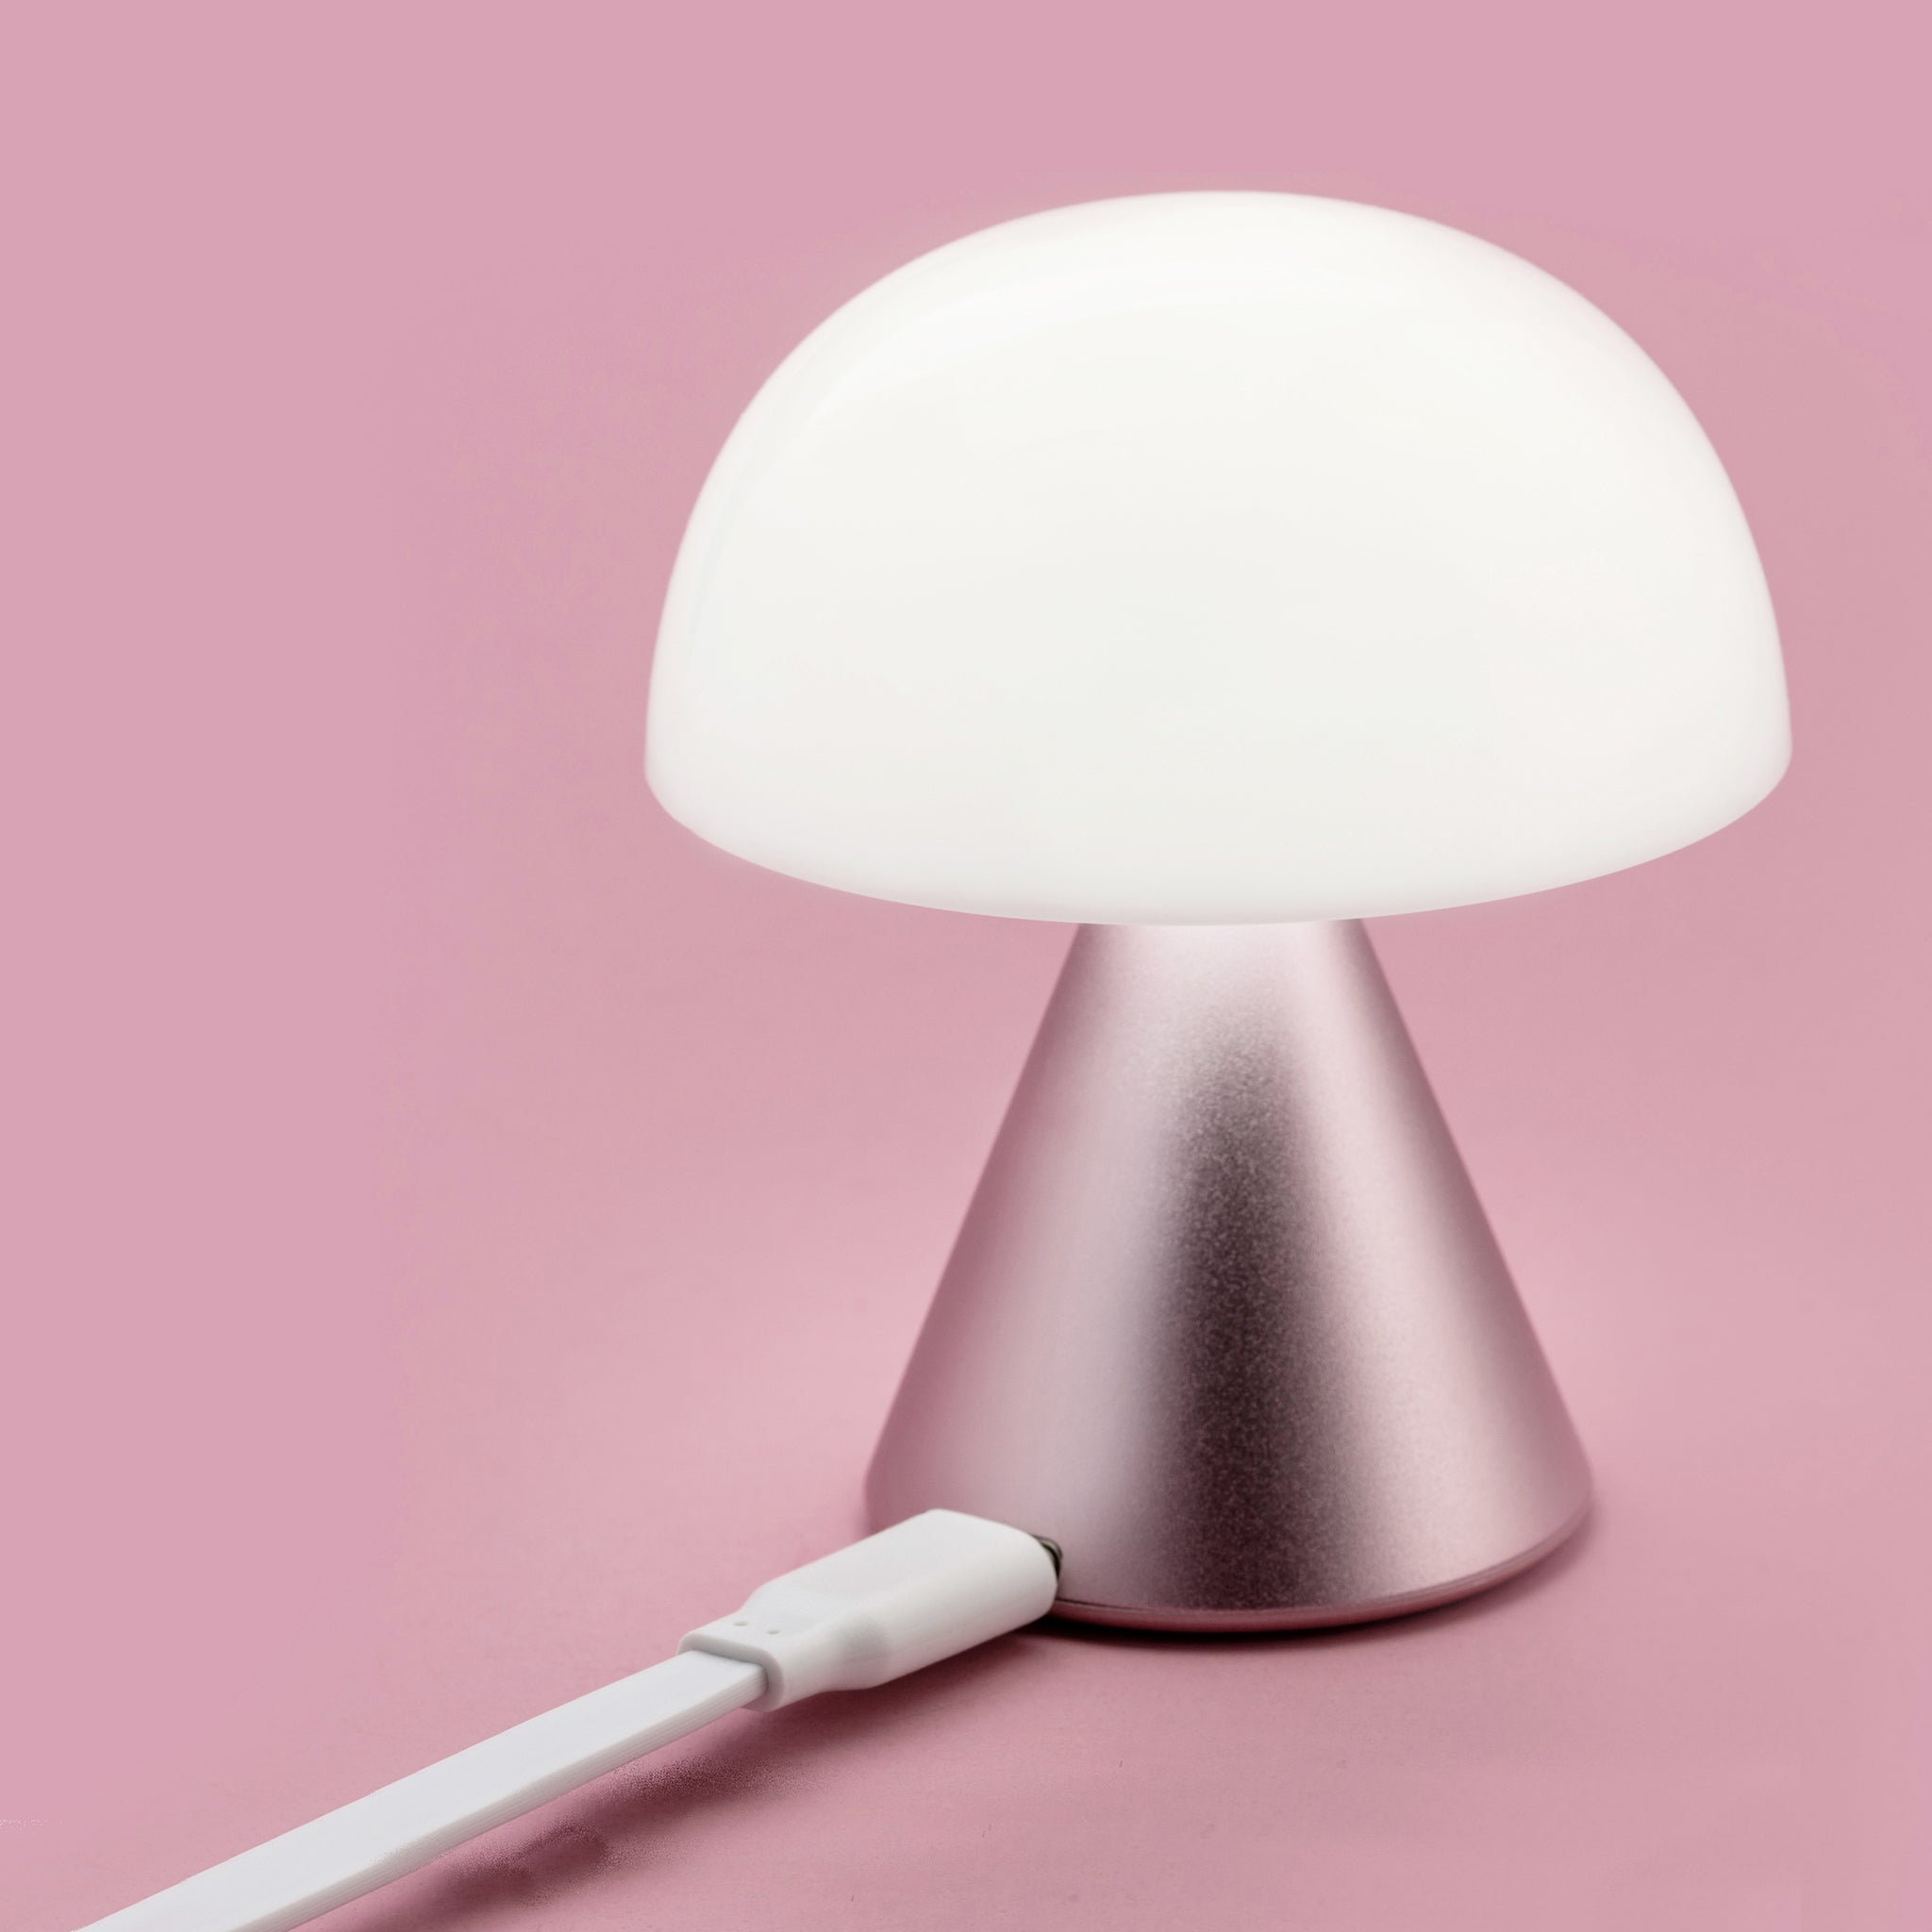 Lexon Mina Small Roze│Oplaadbare LED lamp│art. LH60MLP│wit licht aan met roze achtergrond en usb-kabel